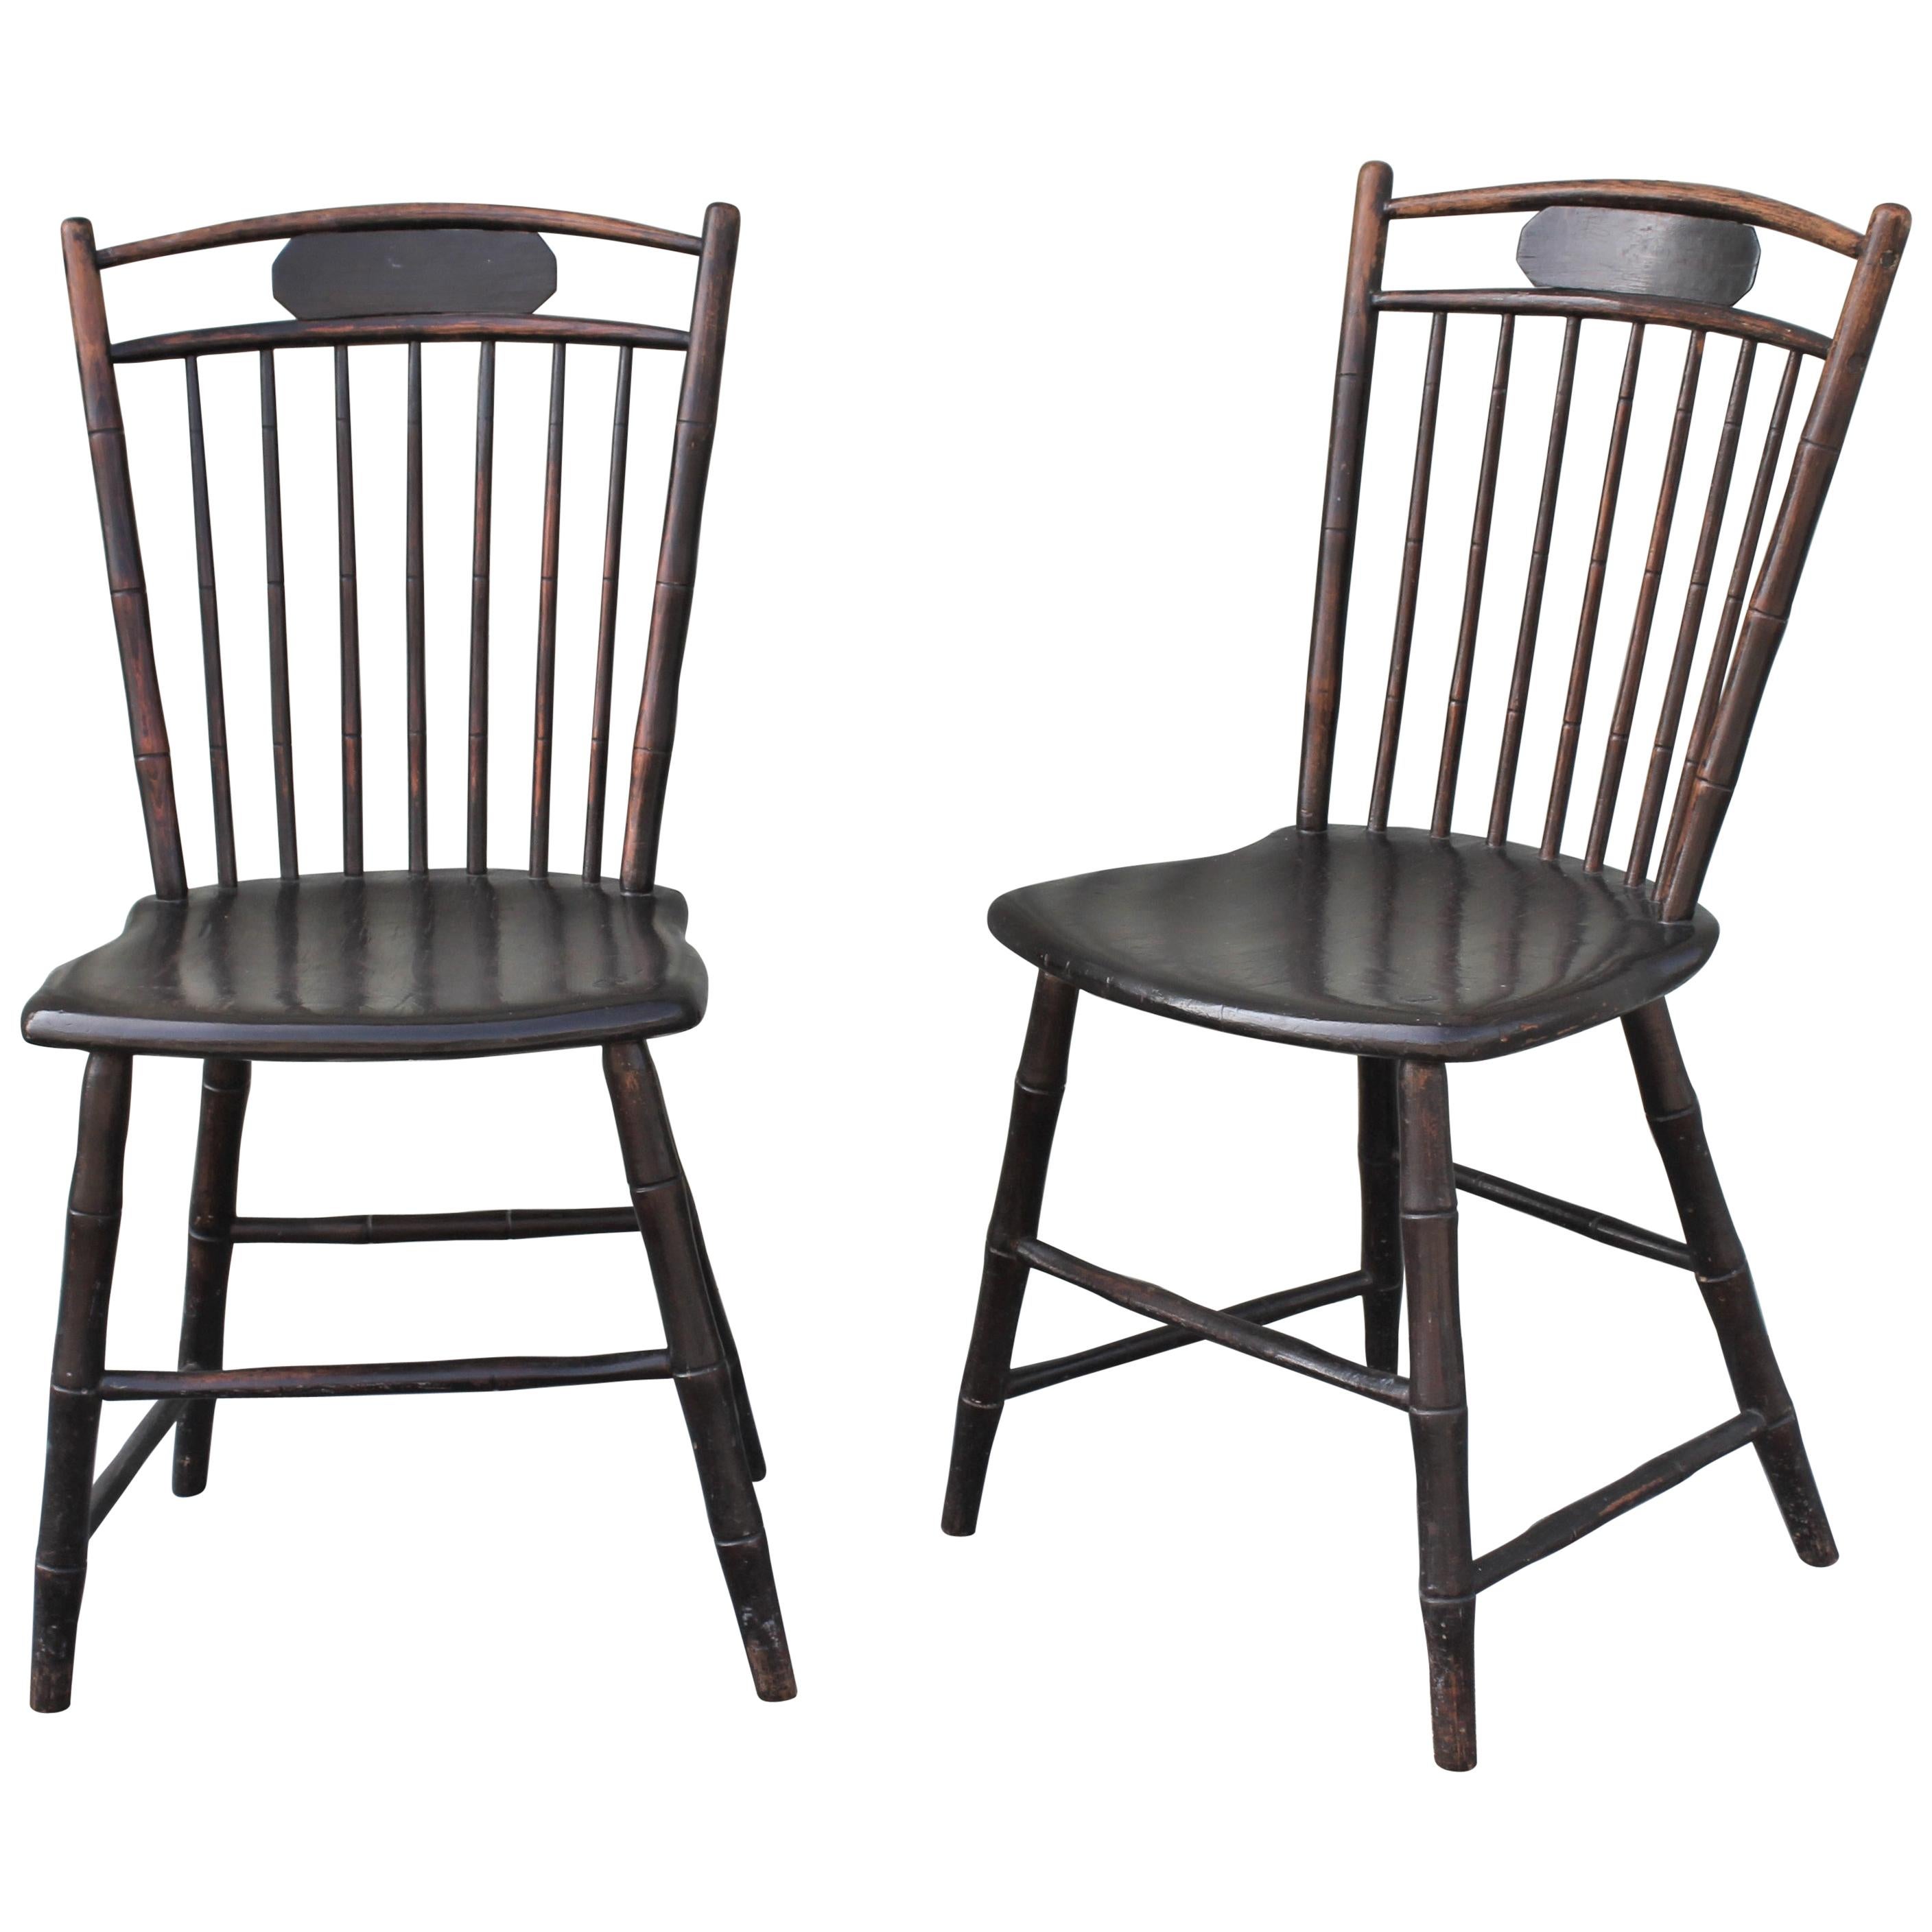 19th Century Original Black Painted Birdcage Windsor Chairs, Pair